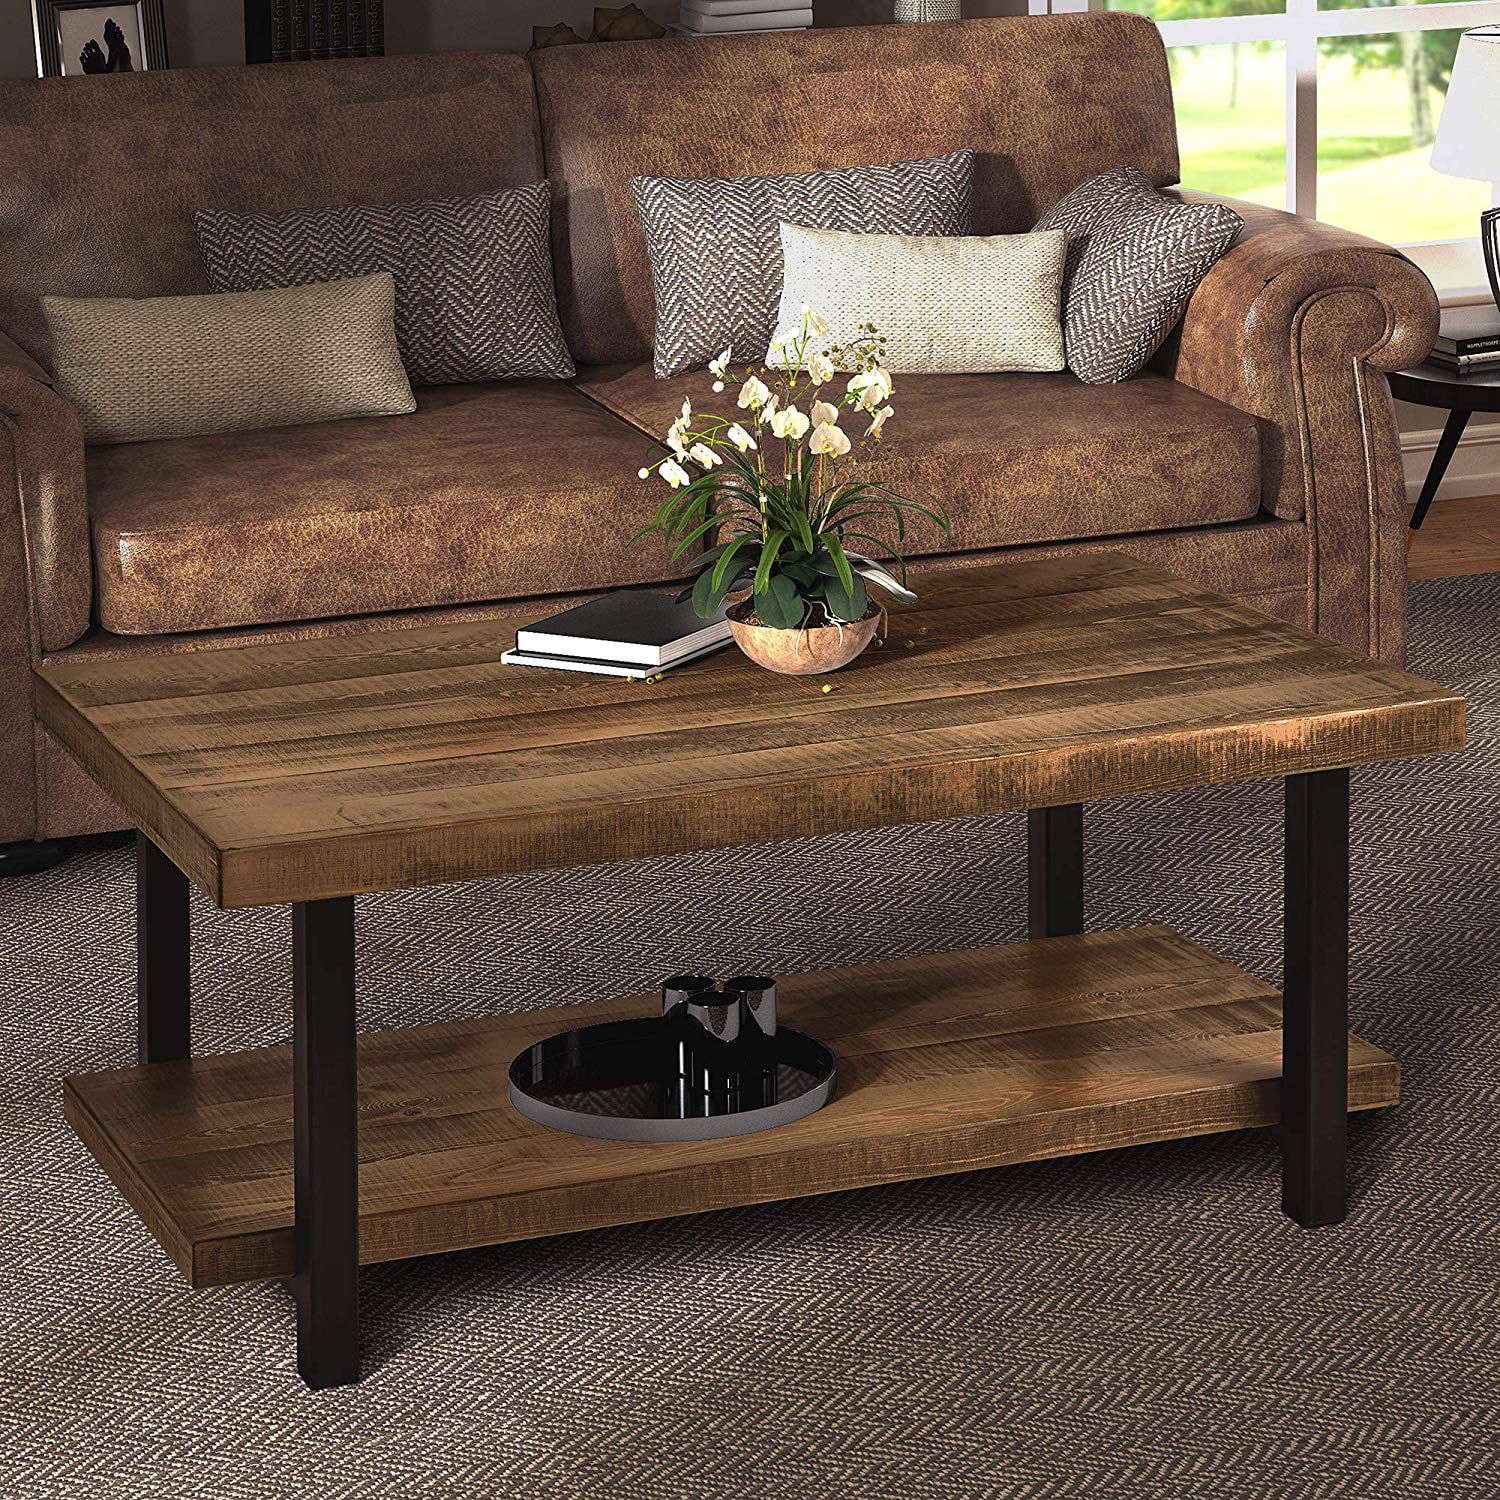 Harper&bright Designs Industrial Rectangular Pine Wood Coffee Table Regarding Rustic Wood Coffee Tables (View 7 of 21)